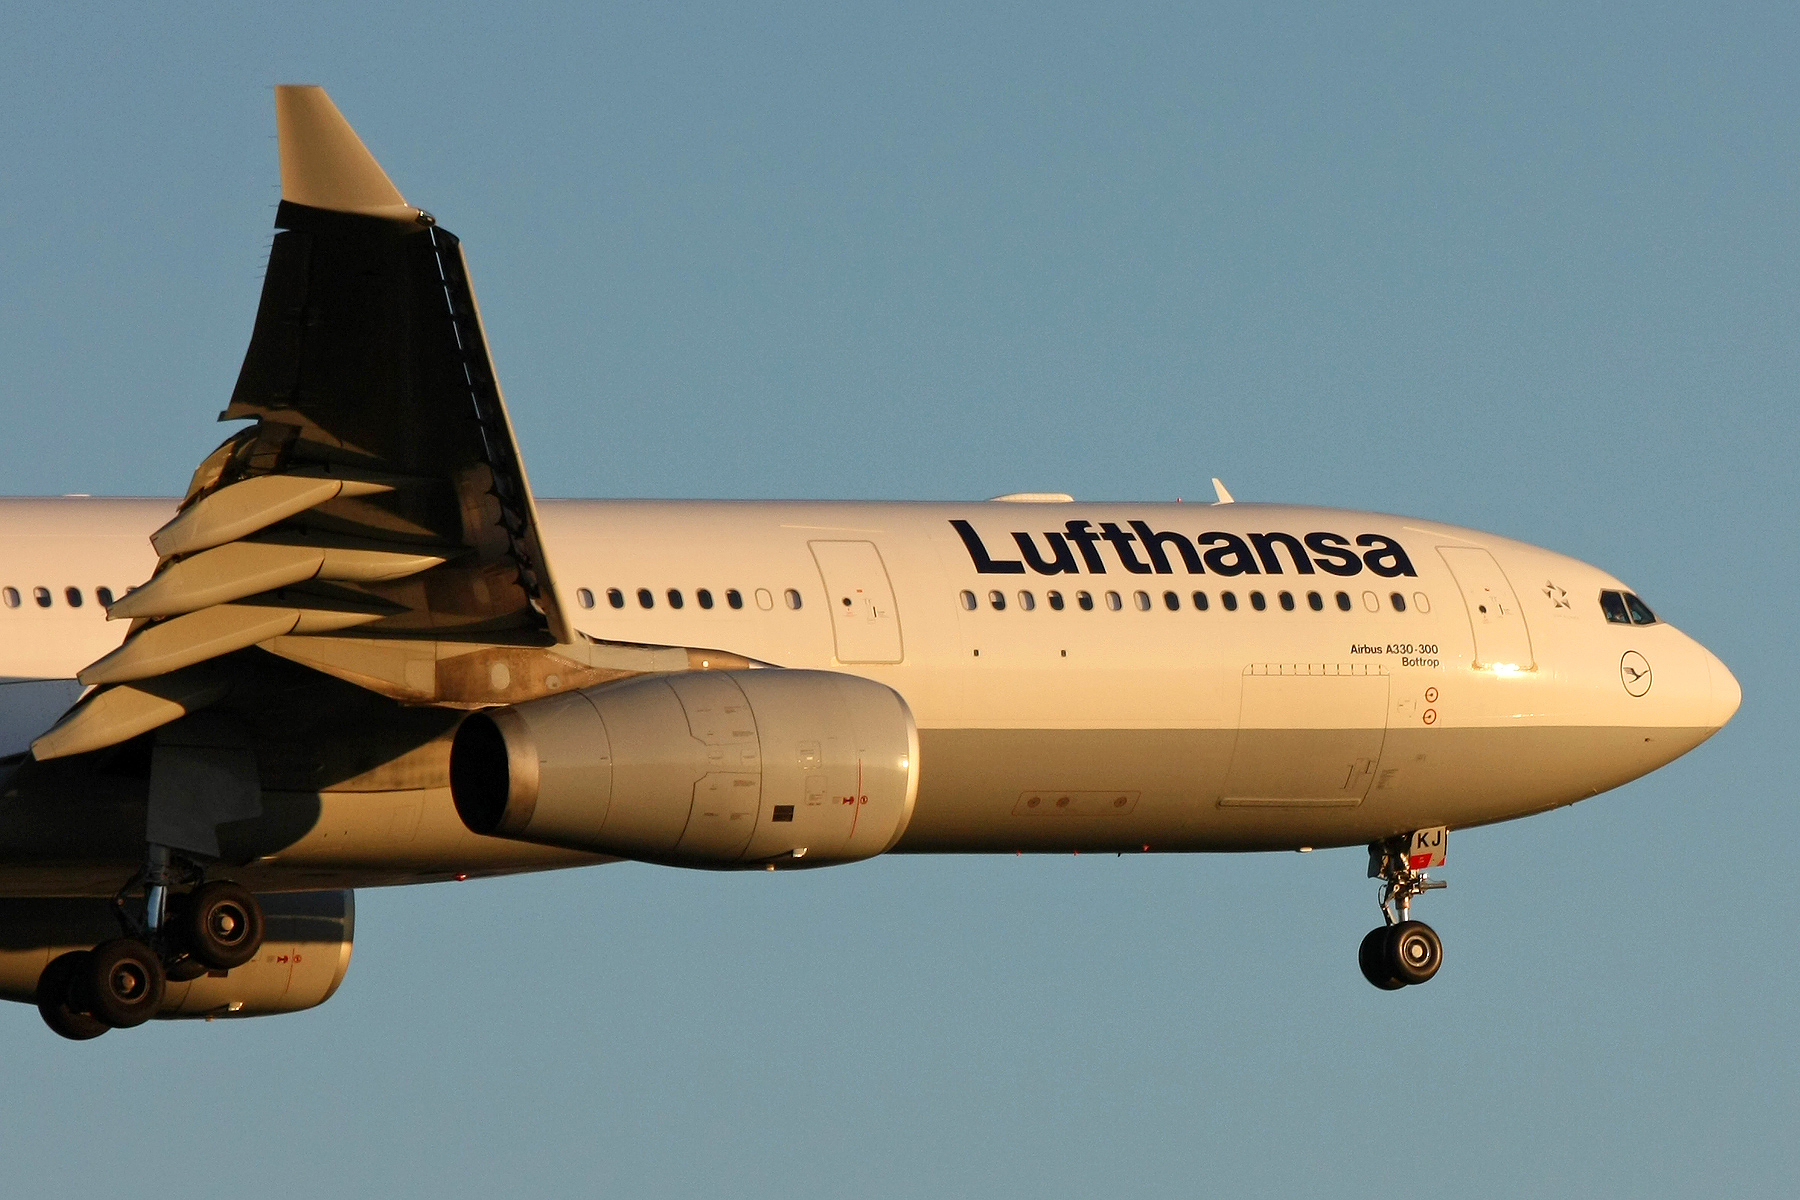 Lufthansa A333 